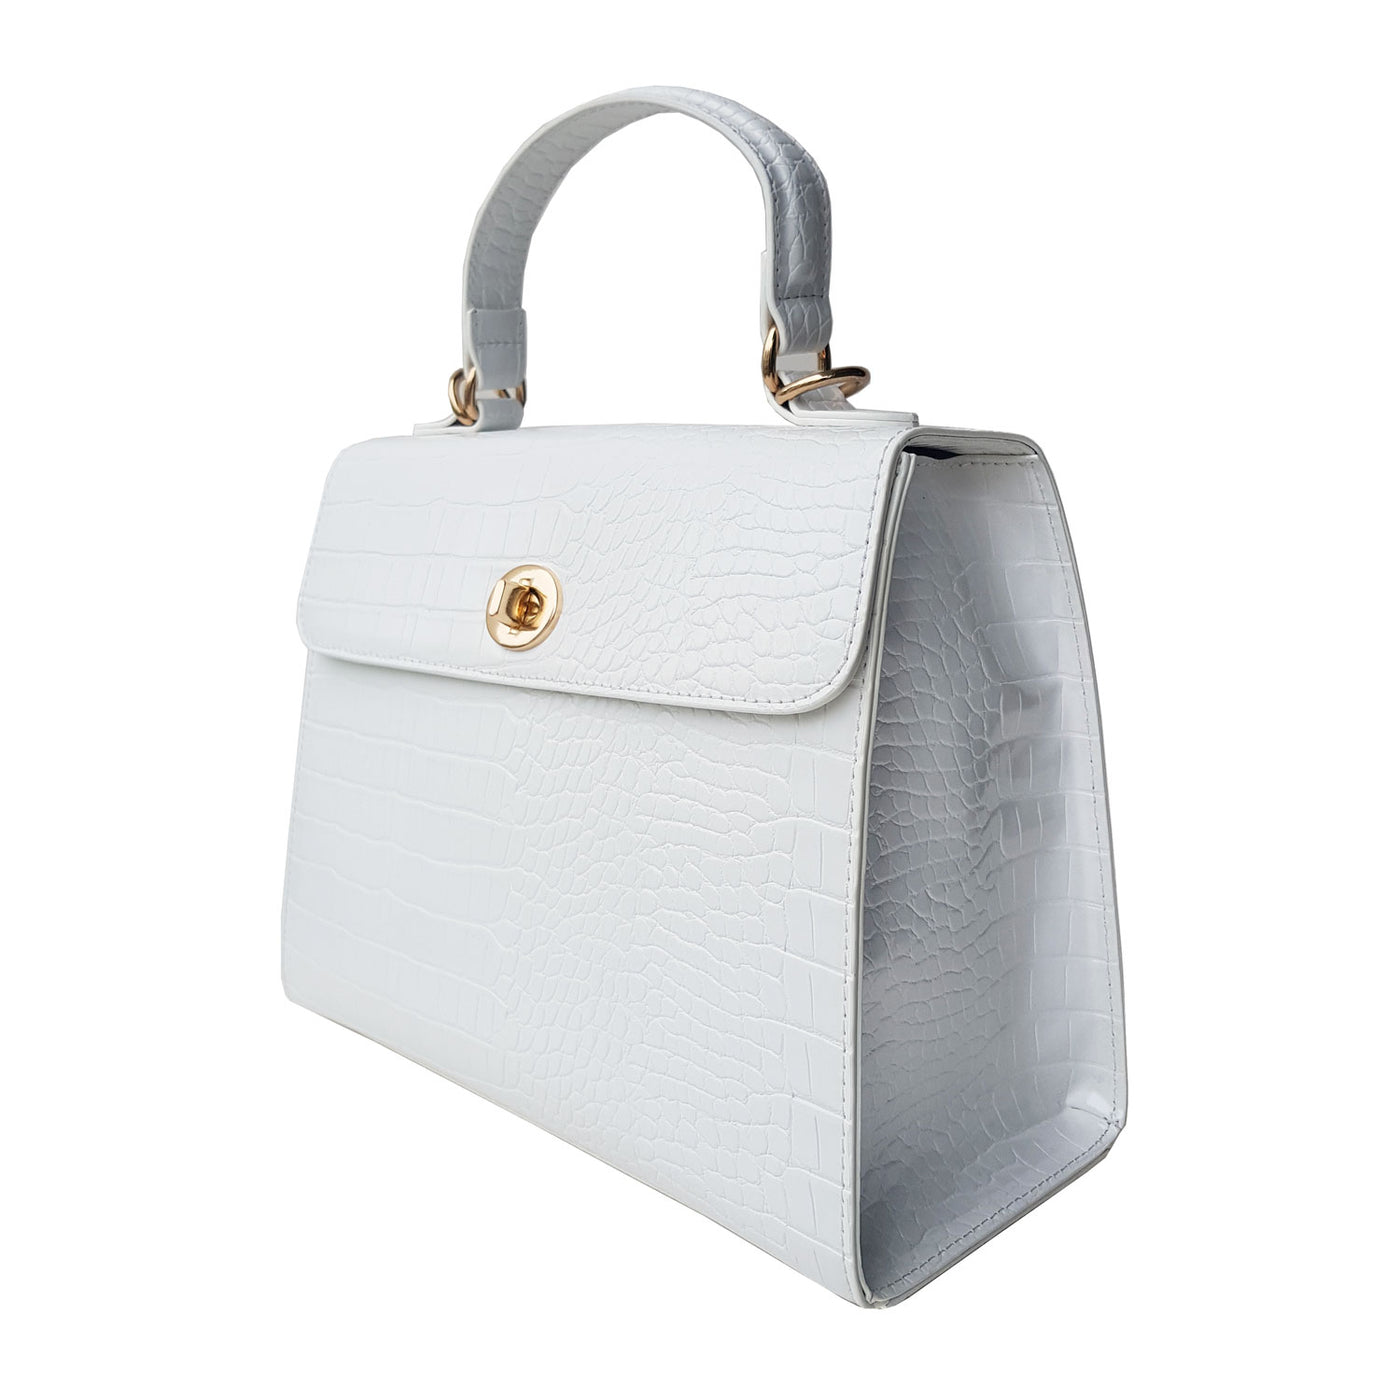 Charlie Stone Vintage Inspired Handbag Retro 1940’s 1950’s Style blanc white Croc Vegan leather